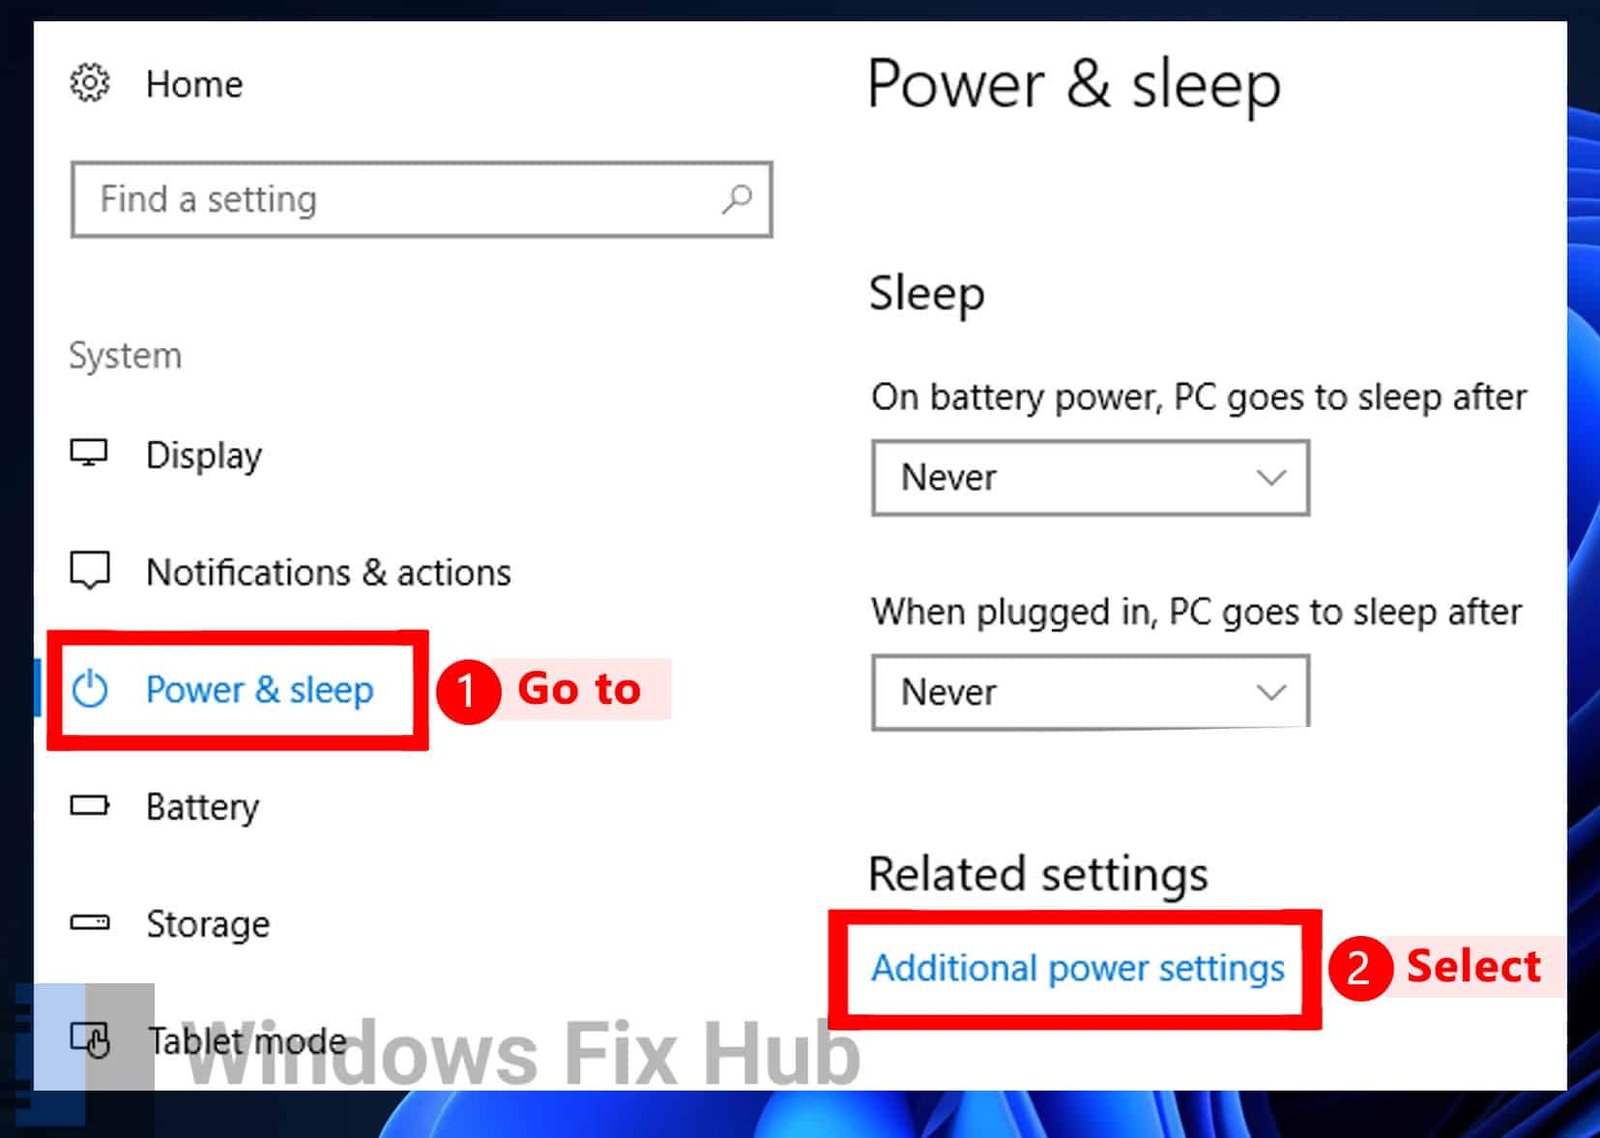 Additional power settings under Power & sleep